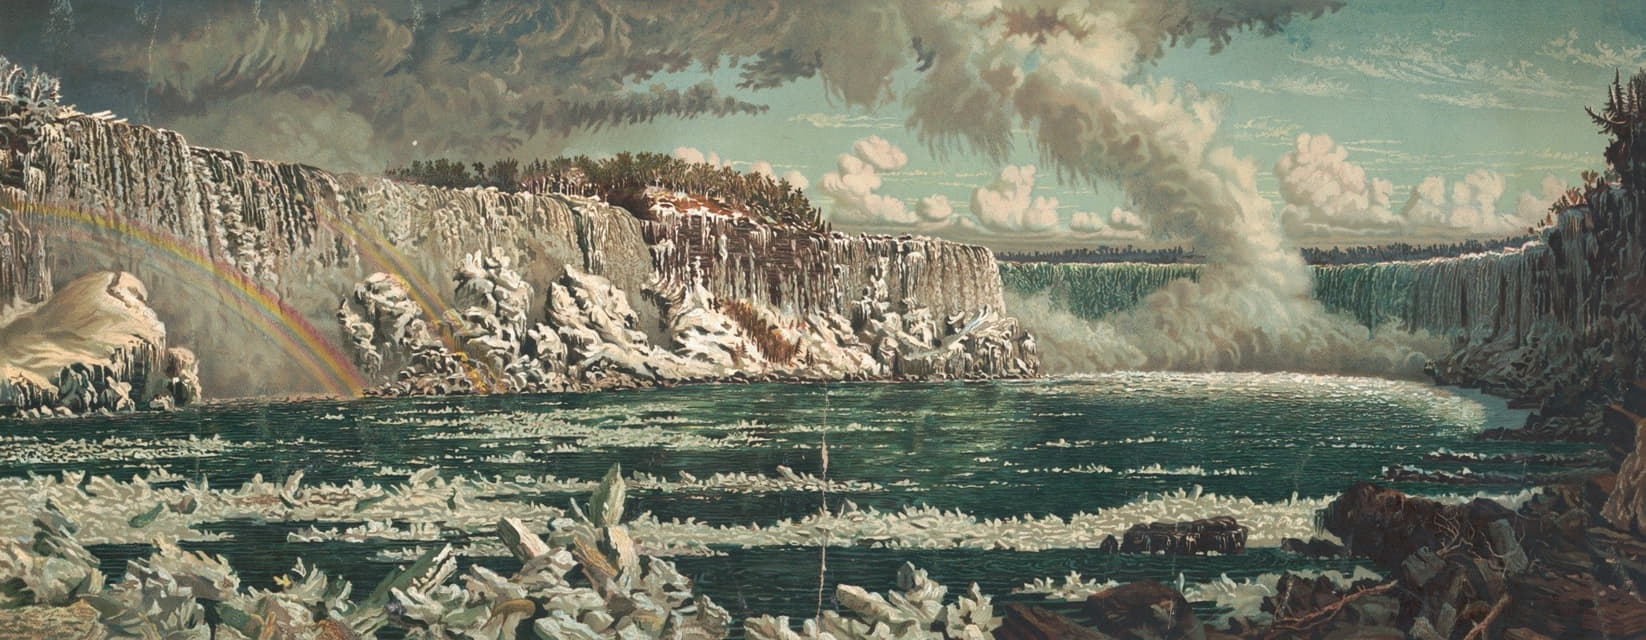 Peter Cauierair - Niagara Falls in winter